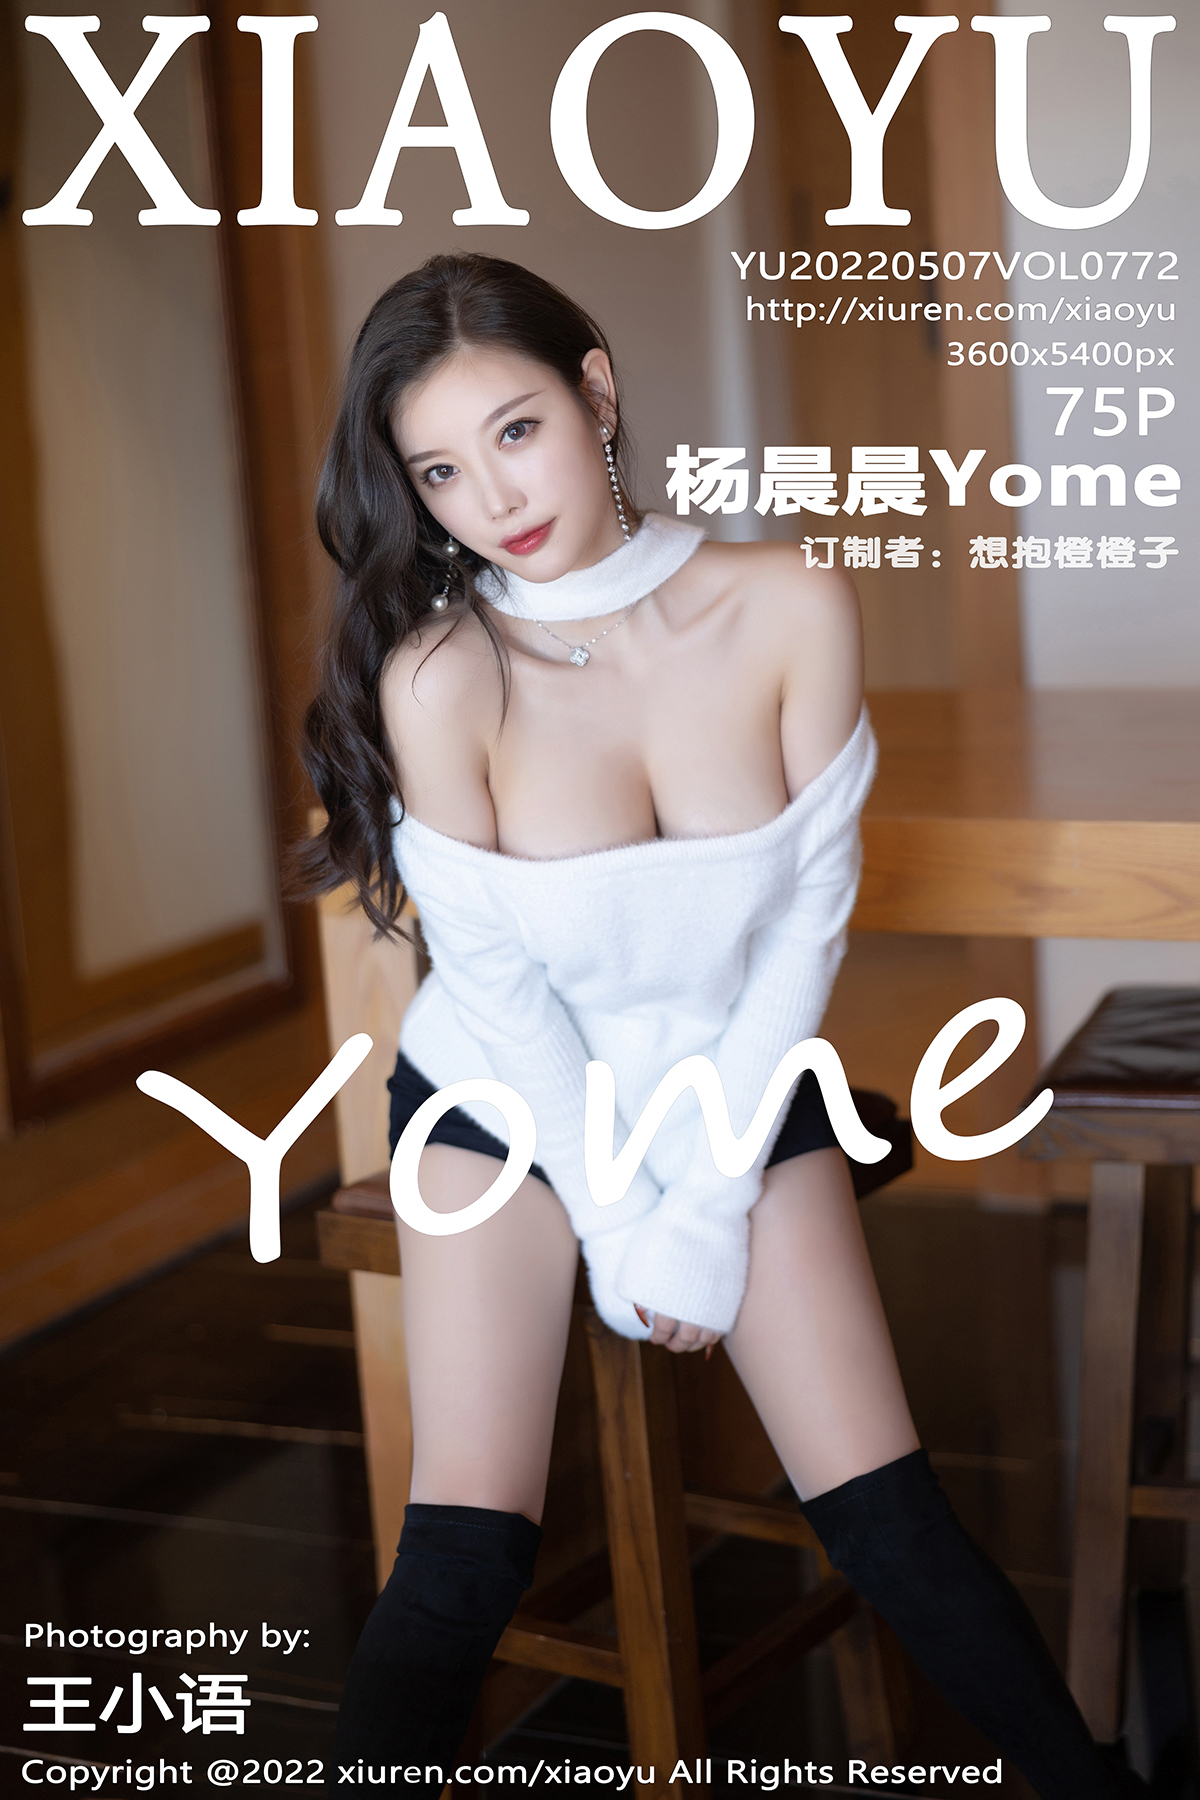 【XIAOYU語畫界】2022.05.07 Vol.772 楊晨晨Yome 完整版無水印寫真【75P】 - 貼圖 - 清涼寫真 -